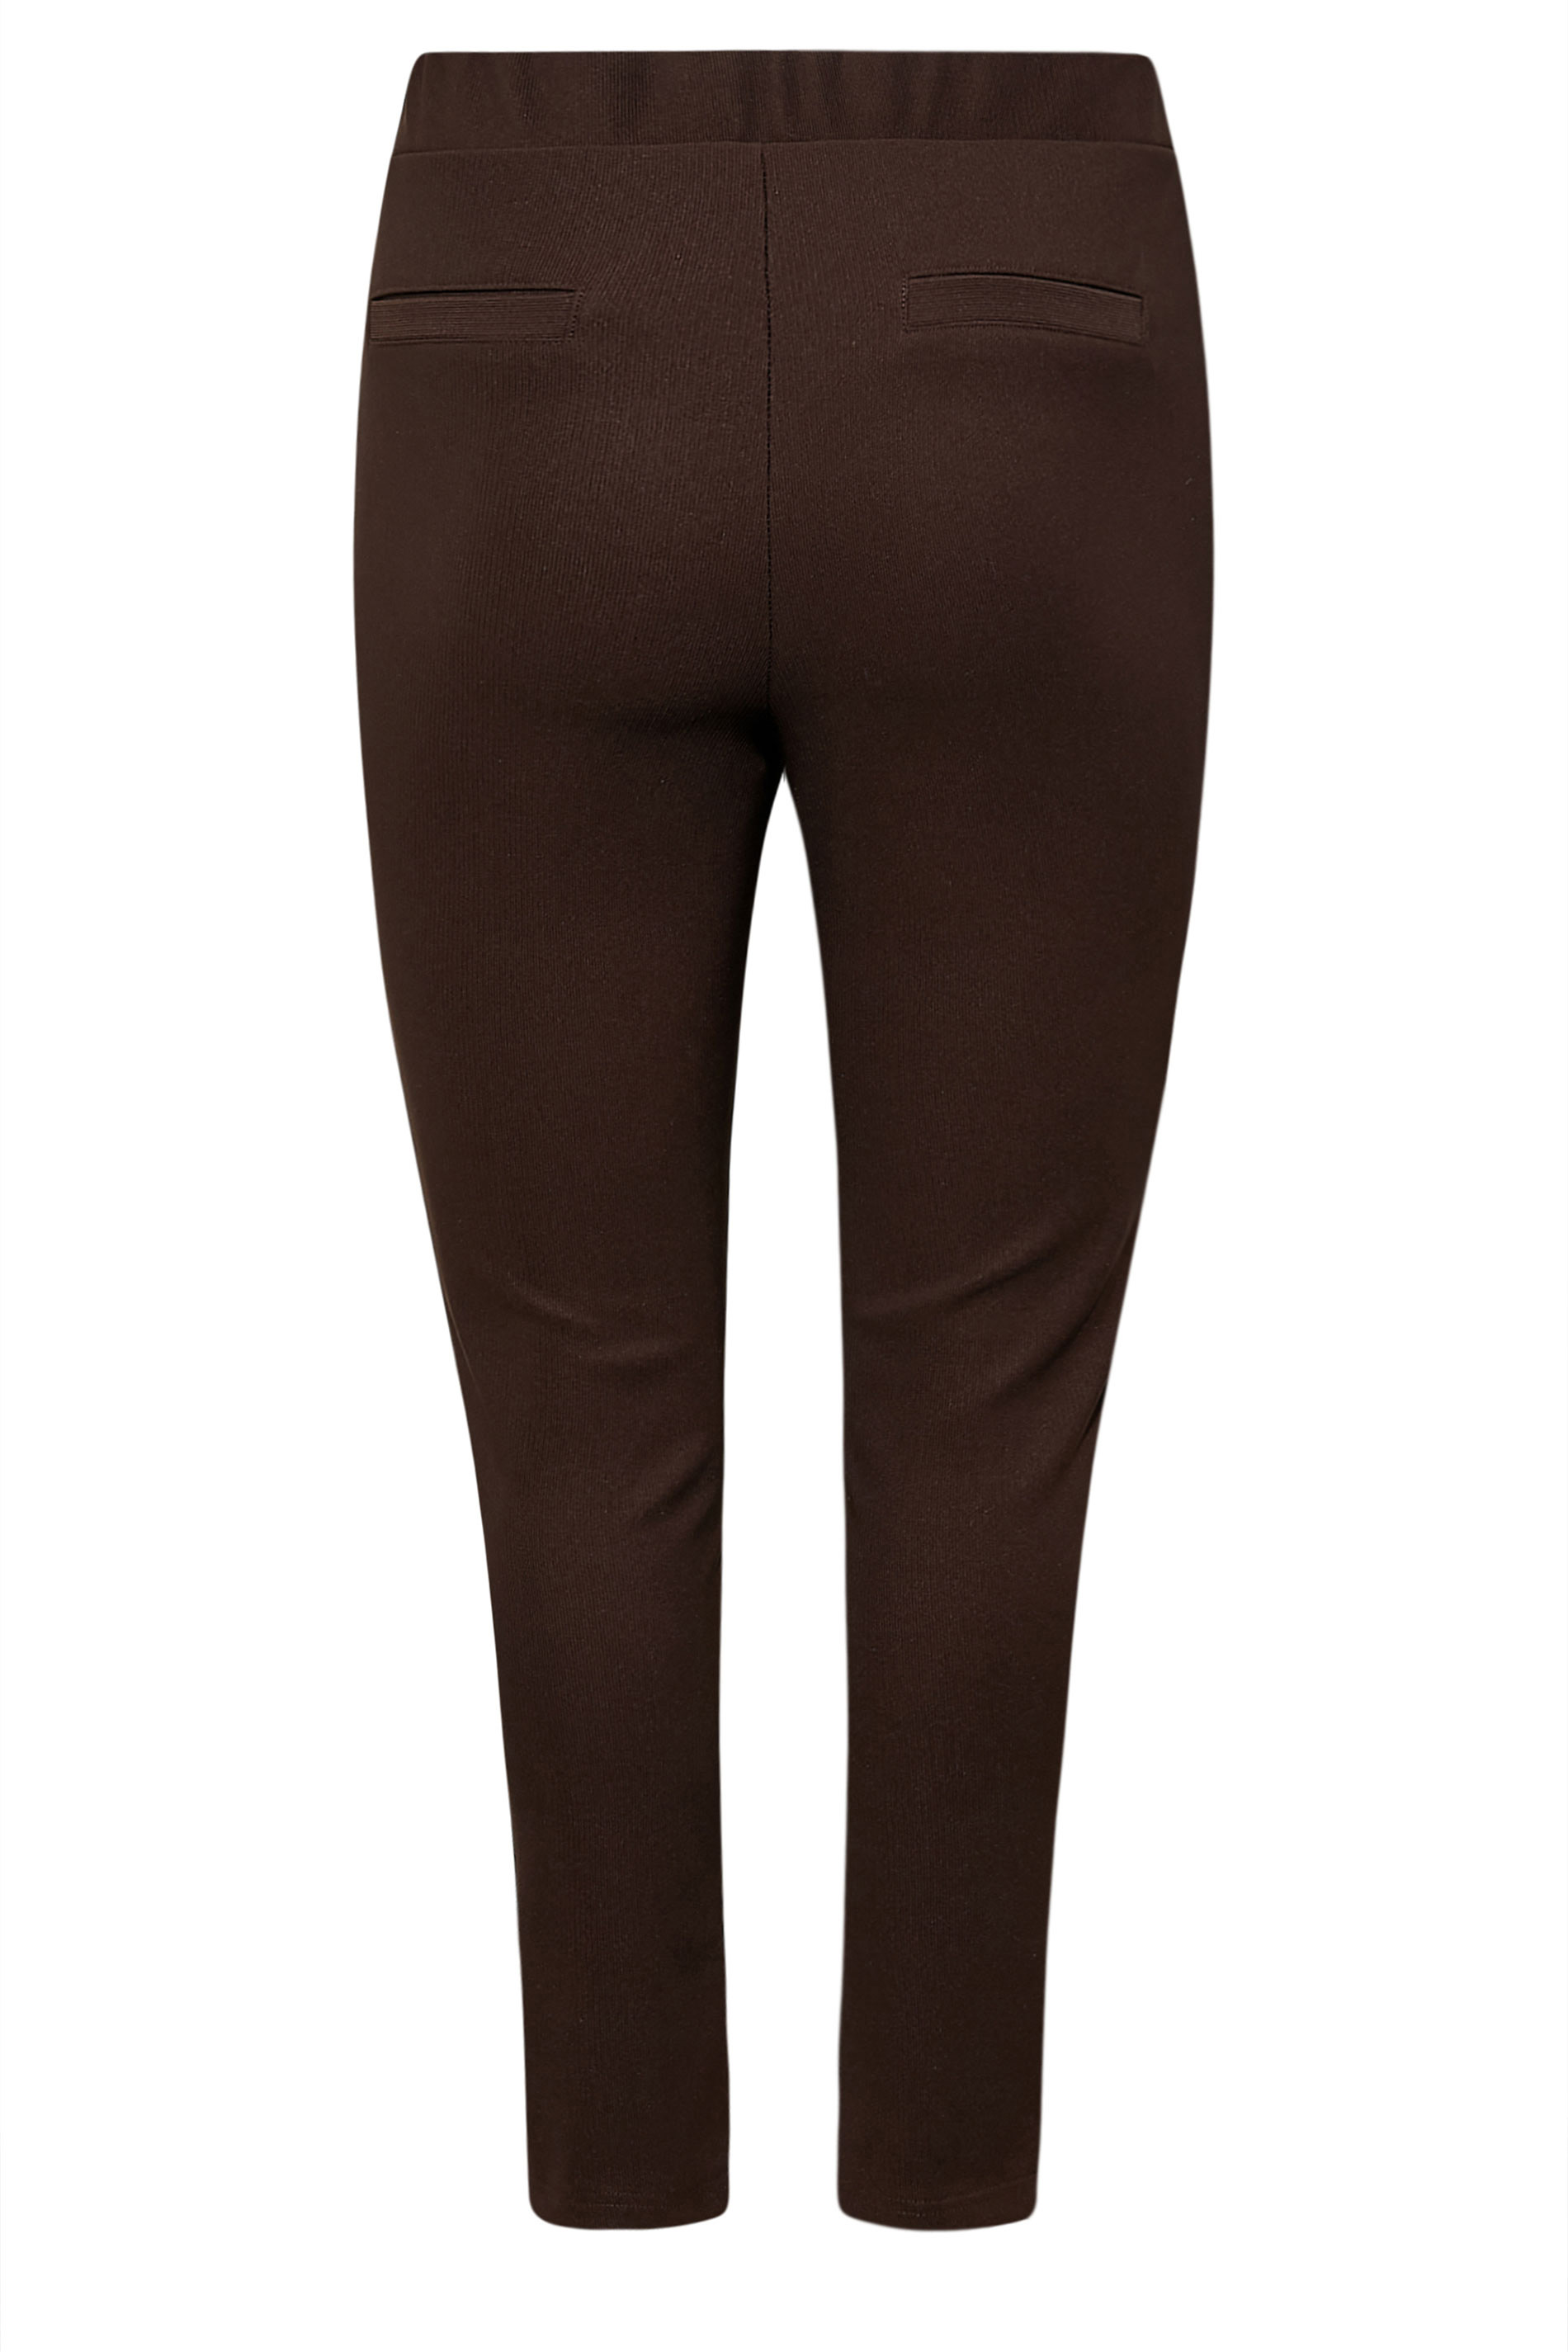 P.a.c.t. Organic fairtrade cotton, XL Chocolate brown leggings. Please  bundle